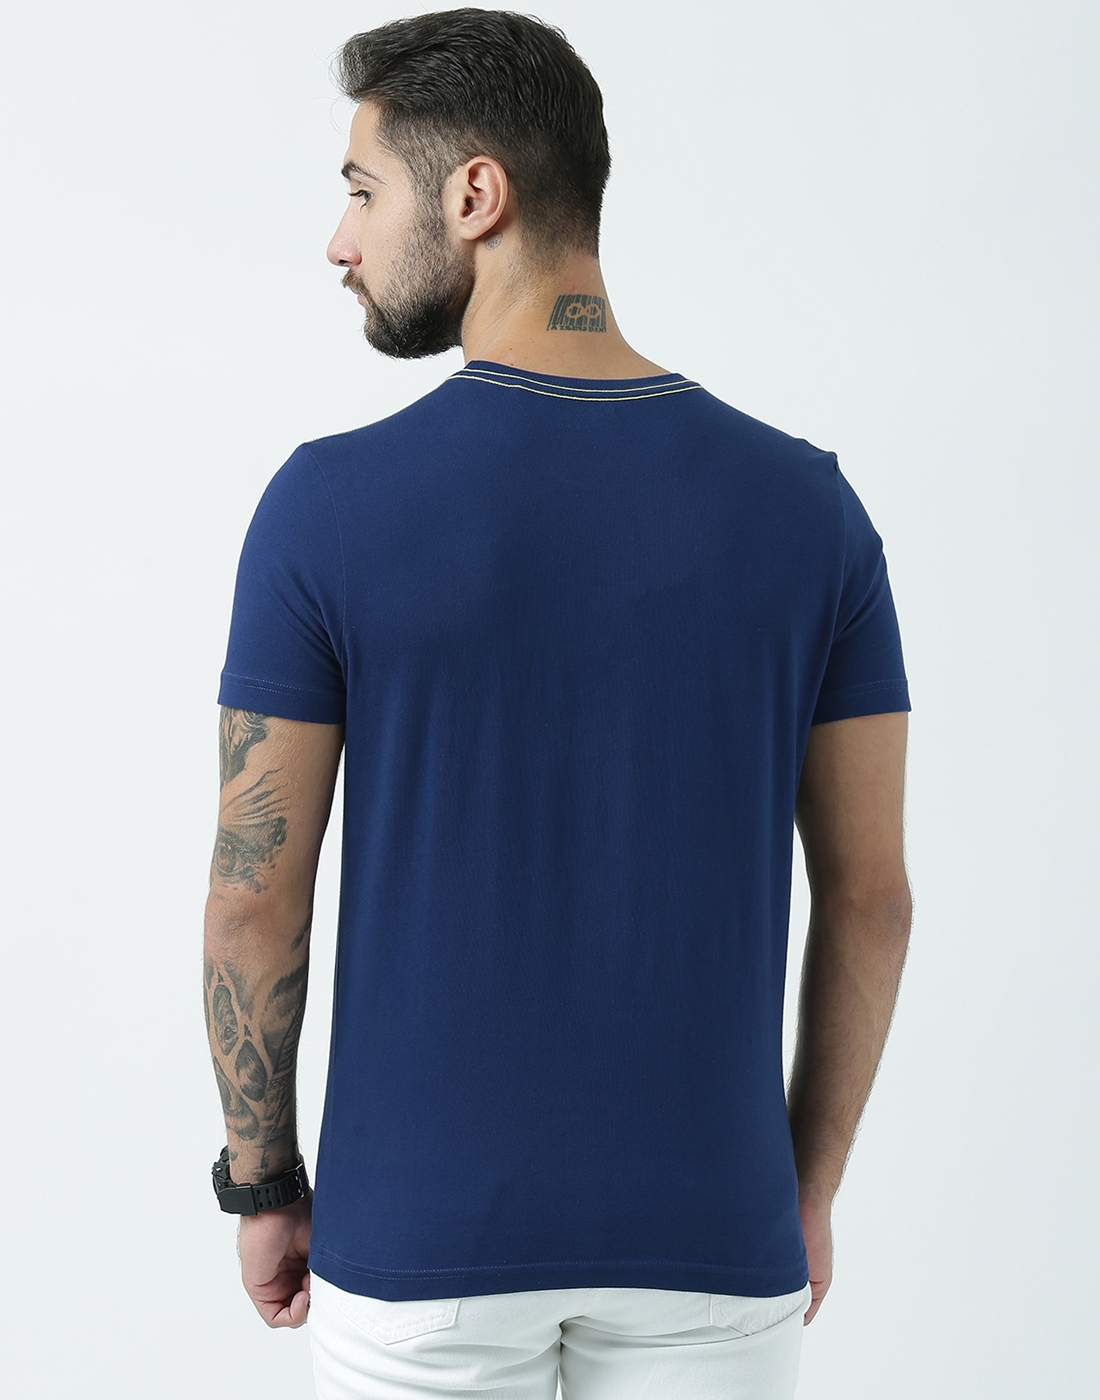 HUETRAP | Huetrap Men's Graphic Round Neck Short Sleeve Launch Navy T-Shirt 1